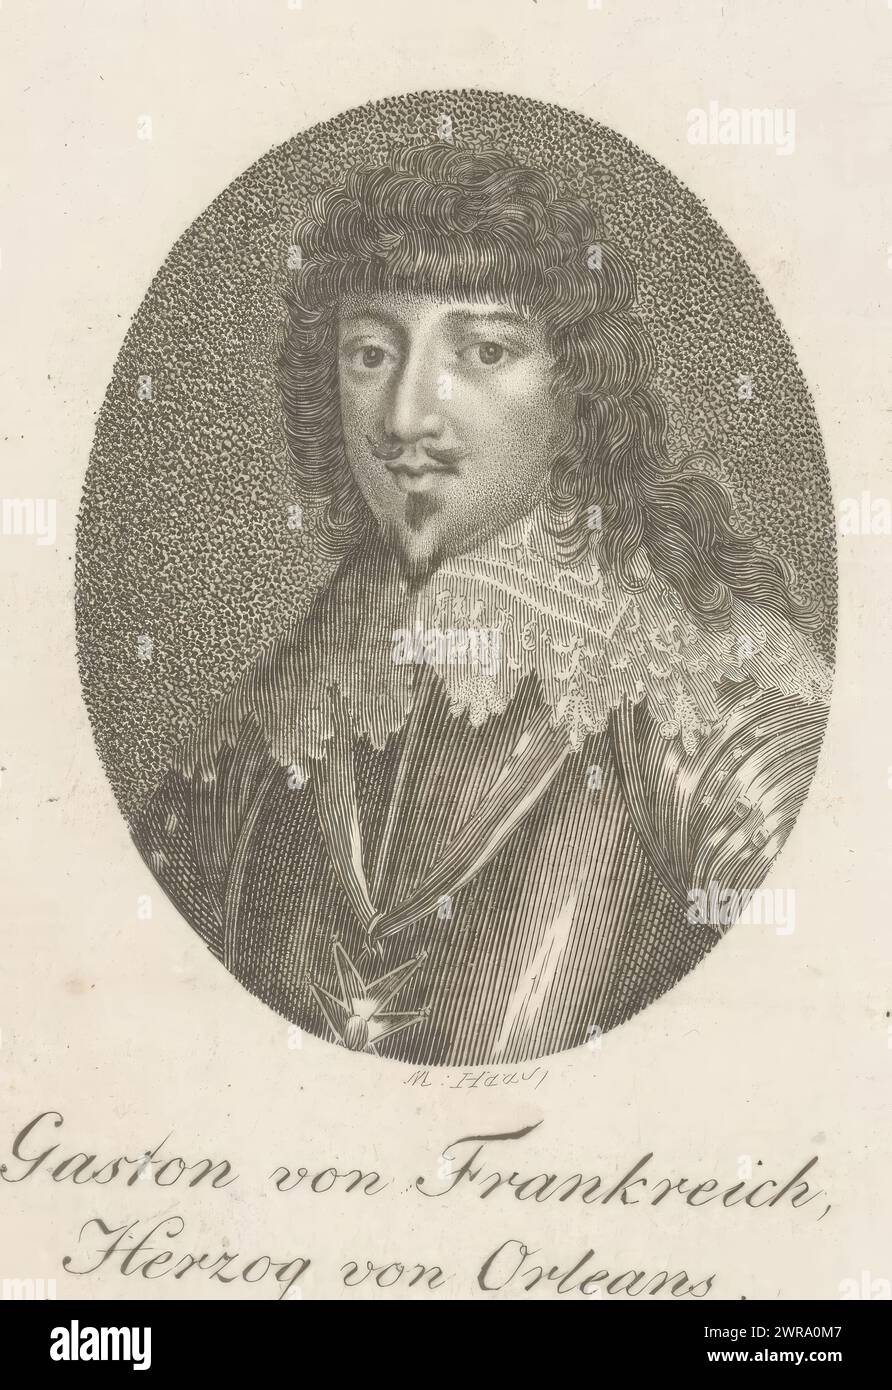 Portrait of Gaston Jean-Baptiste Duke of Orleans, print maker: Meno Haas, 1762 - 1833, paper, engraving, height 102 mm × width 60 mm, print Stock Photo